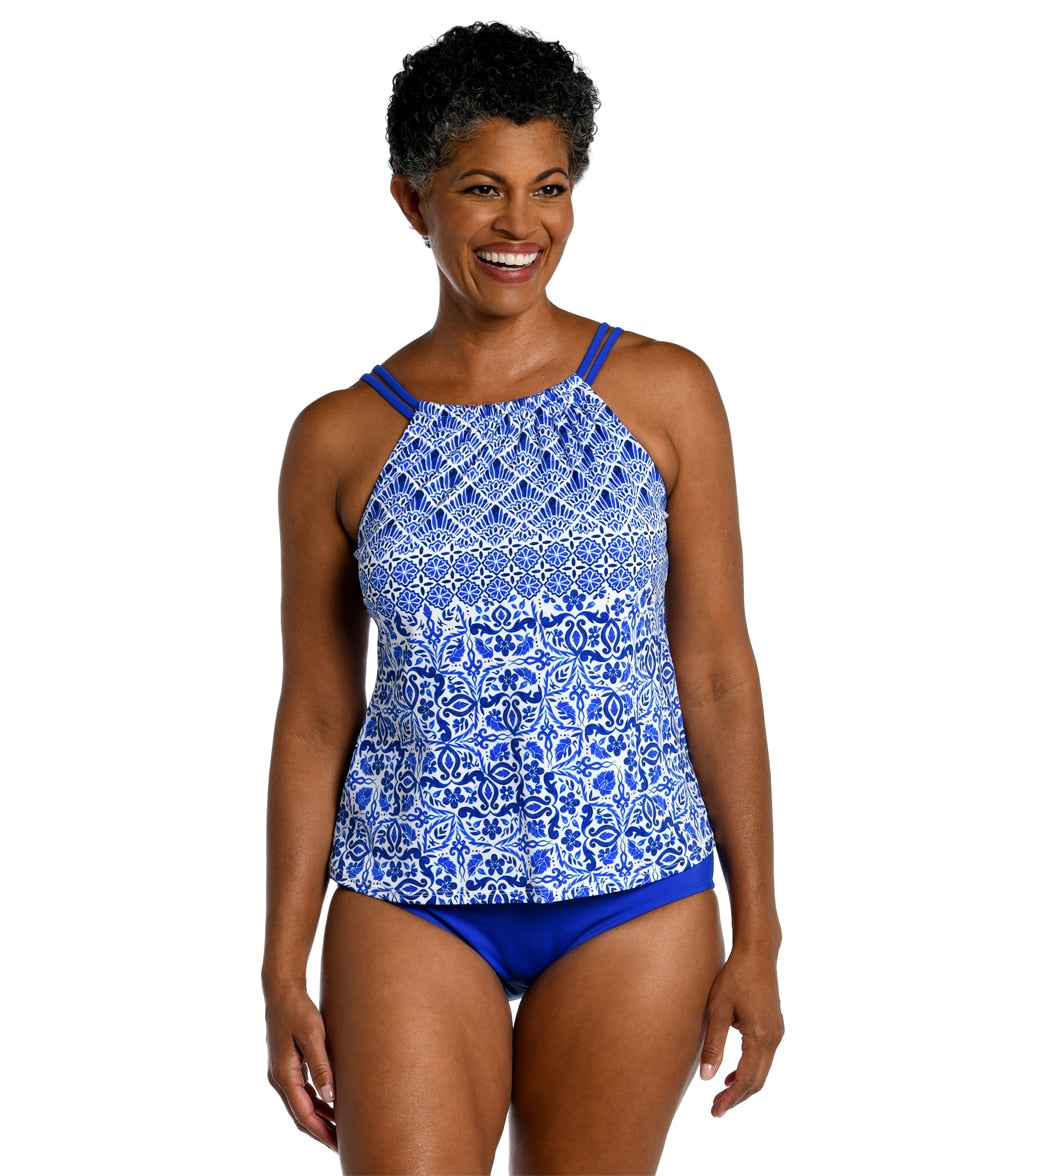 Qiribati Women's Tankini Swimsuits Layered Mesh Lace Overlay Top